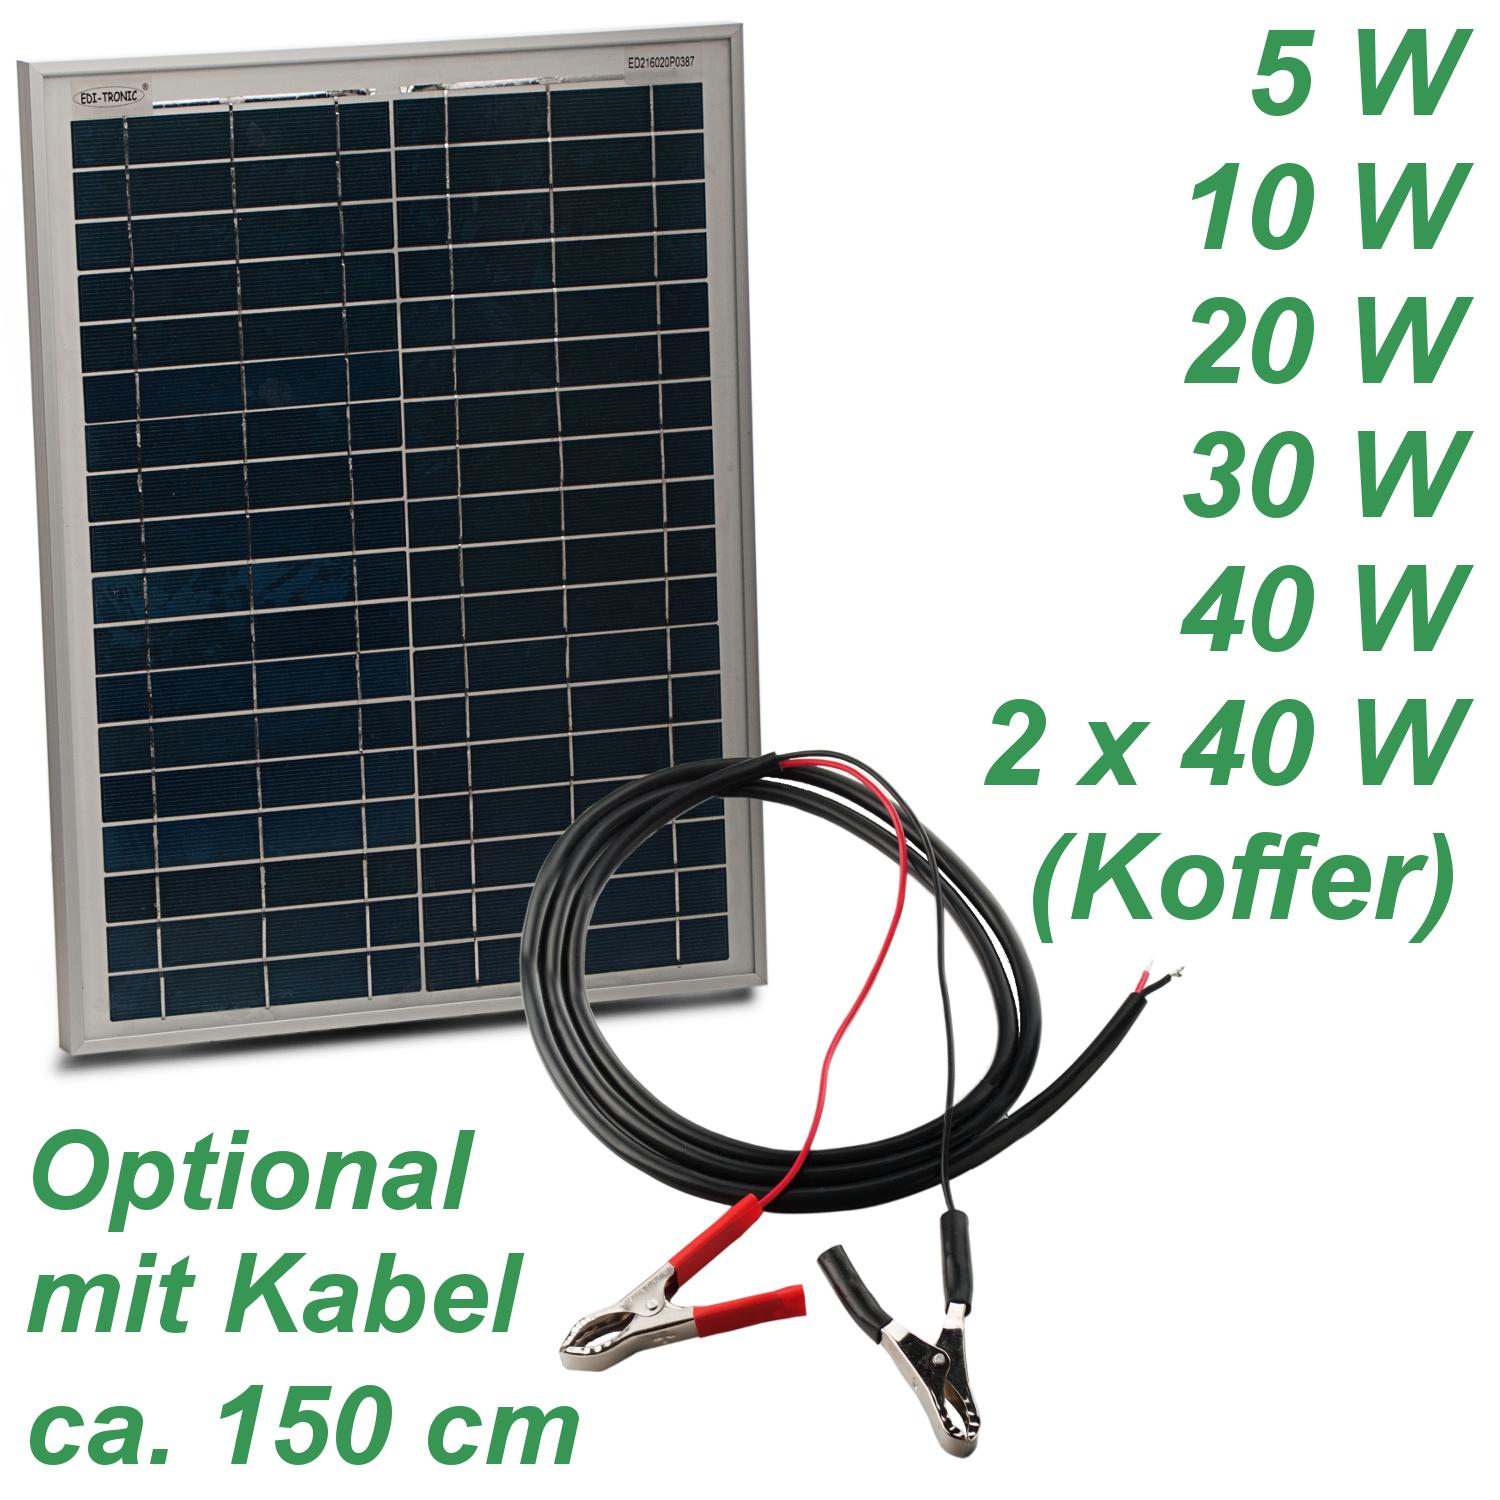 Solarpanels 5 / 10 / 20 / 30 / 40/ 2 x 40 W + Kabel